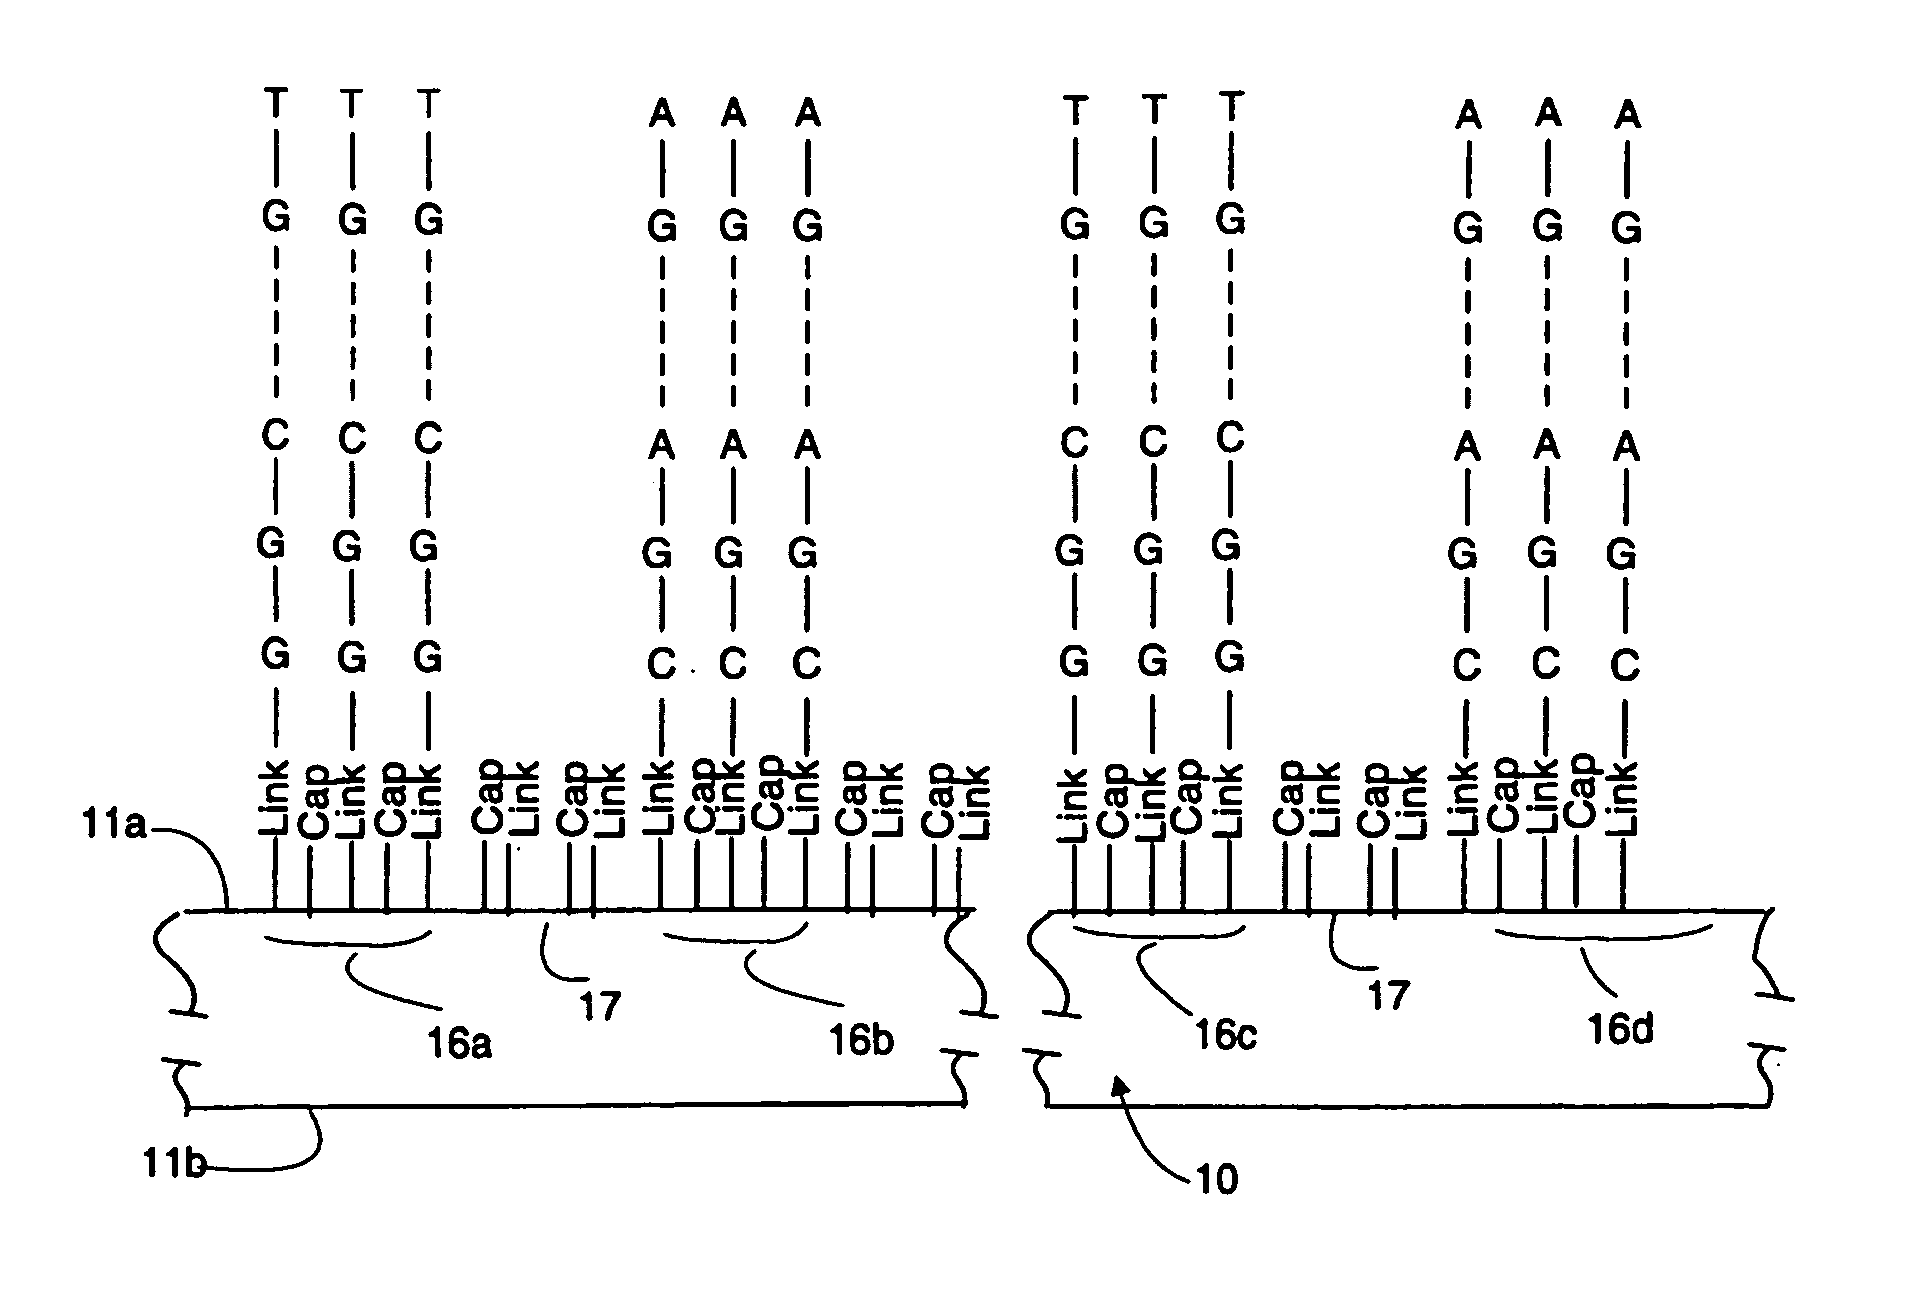 Chemical arrays on a common carrier